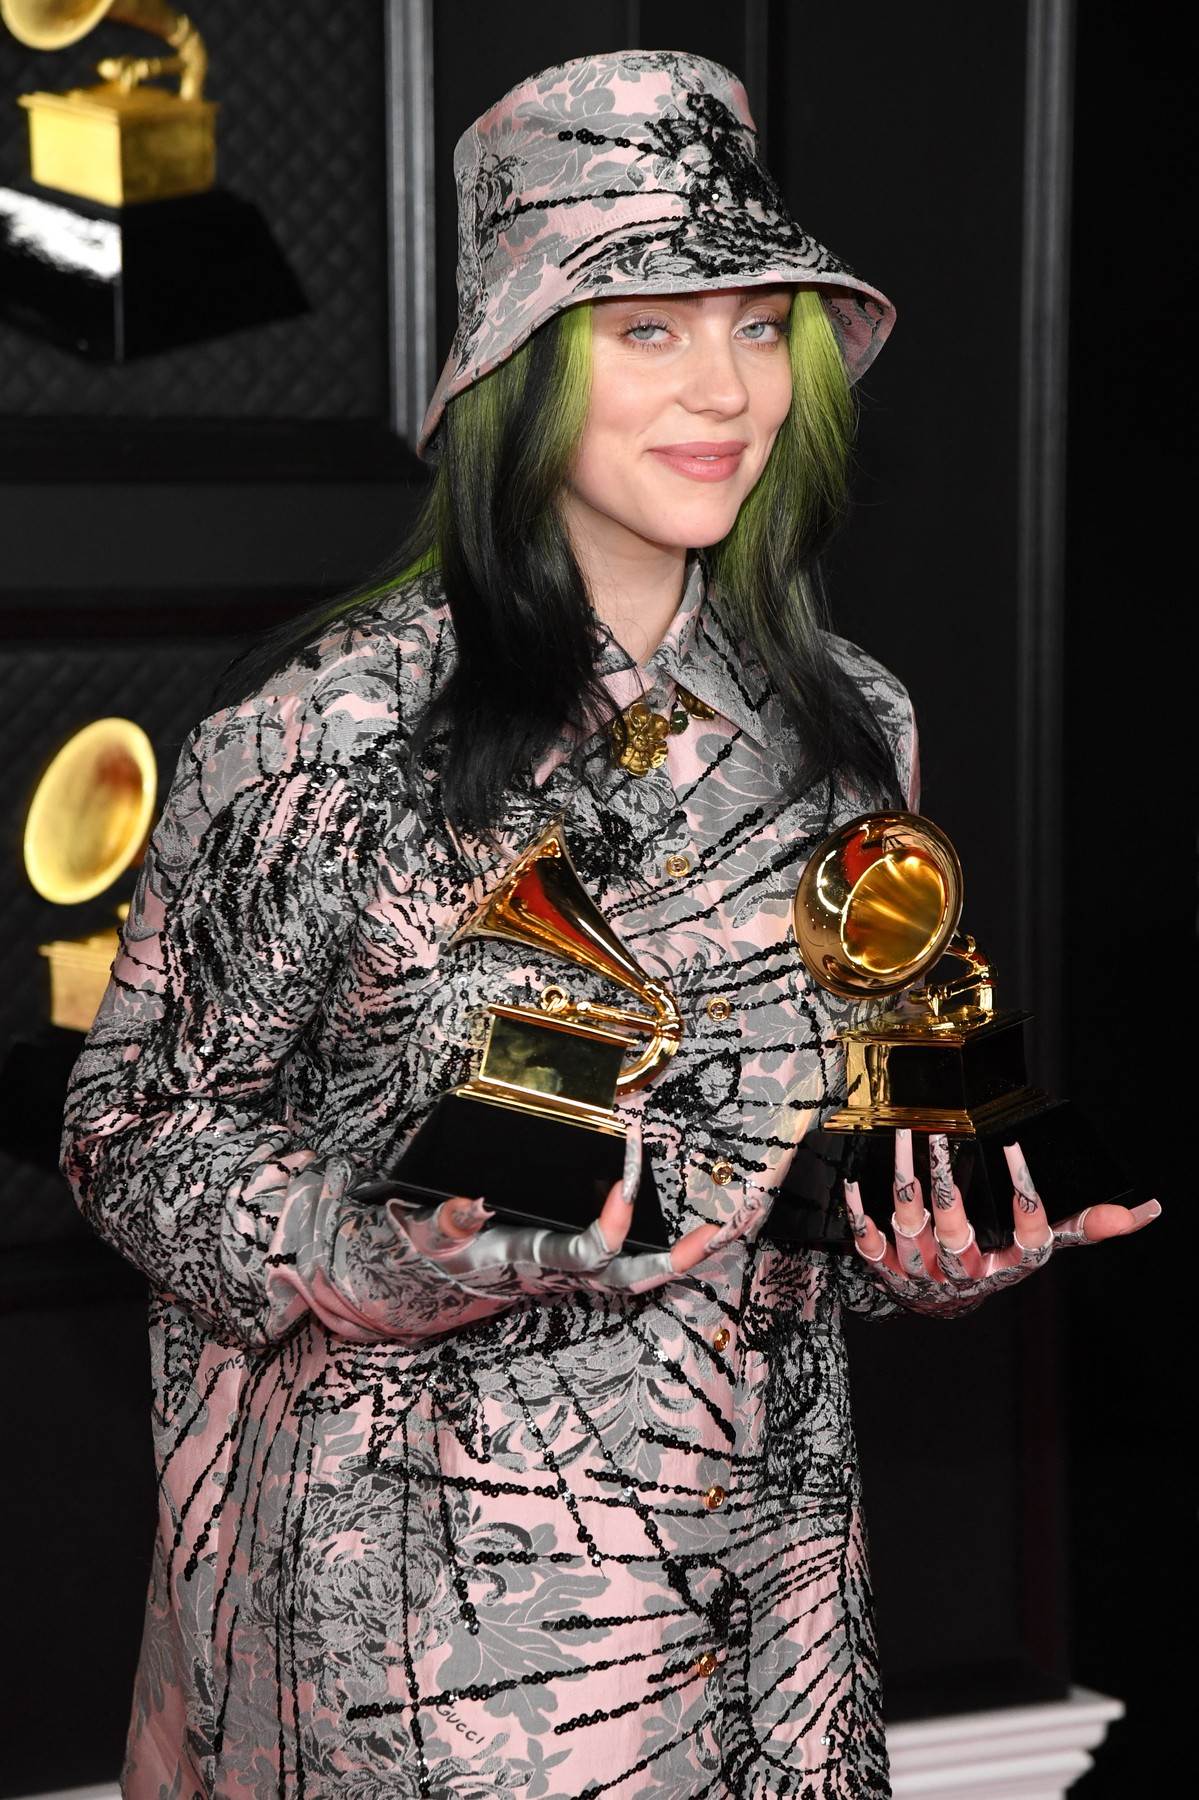 ŽENSKA DOMINACIJA Održana je 63. dodjela nagrada Grammy